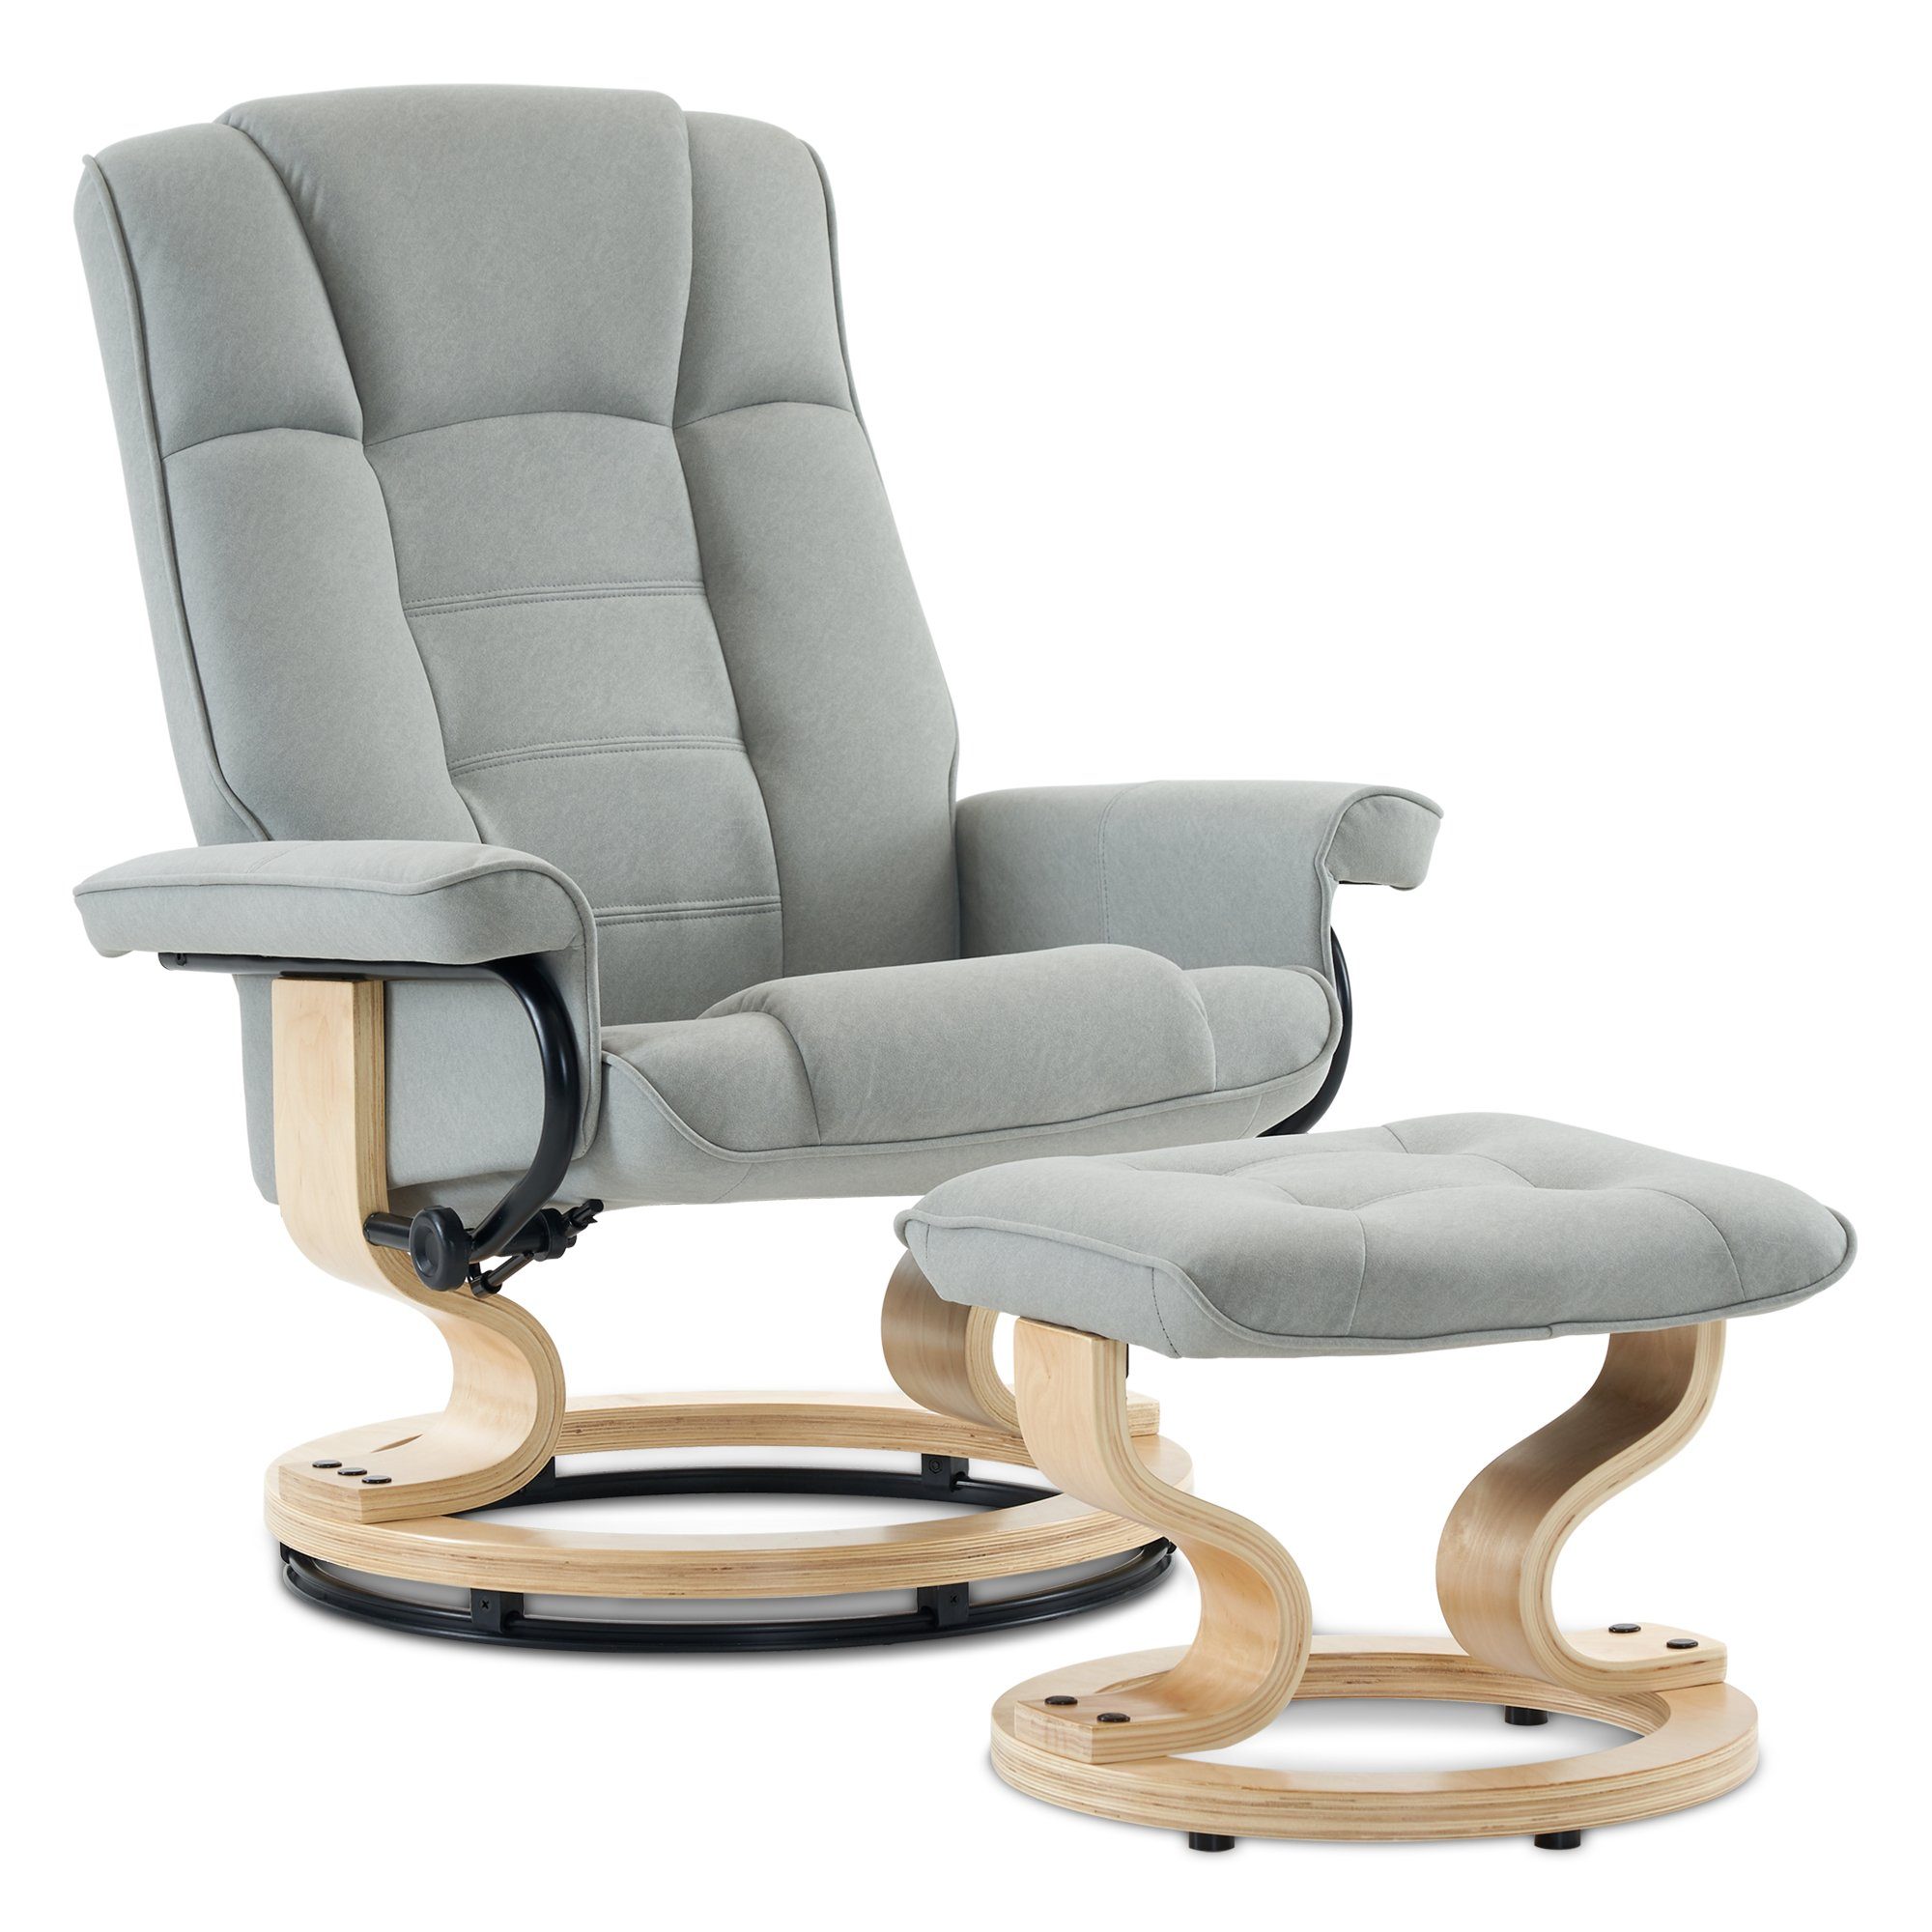 MCombo TV-Sessel MCombo Relaxsessel mit Hocker 9019, 360°drehbarer Fernsehsessel mit Liegefunktion, mit Hocker Hellgrau-Mikrofaser